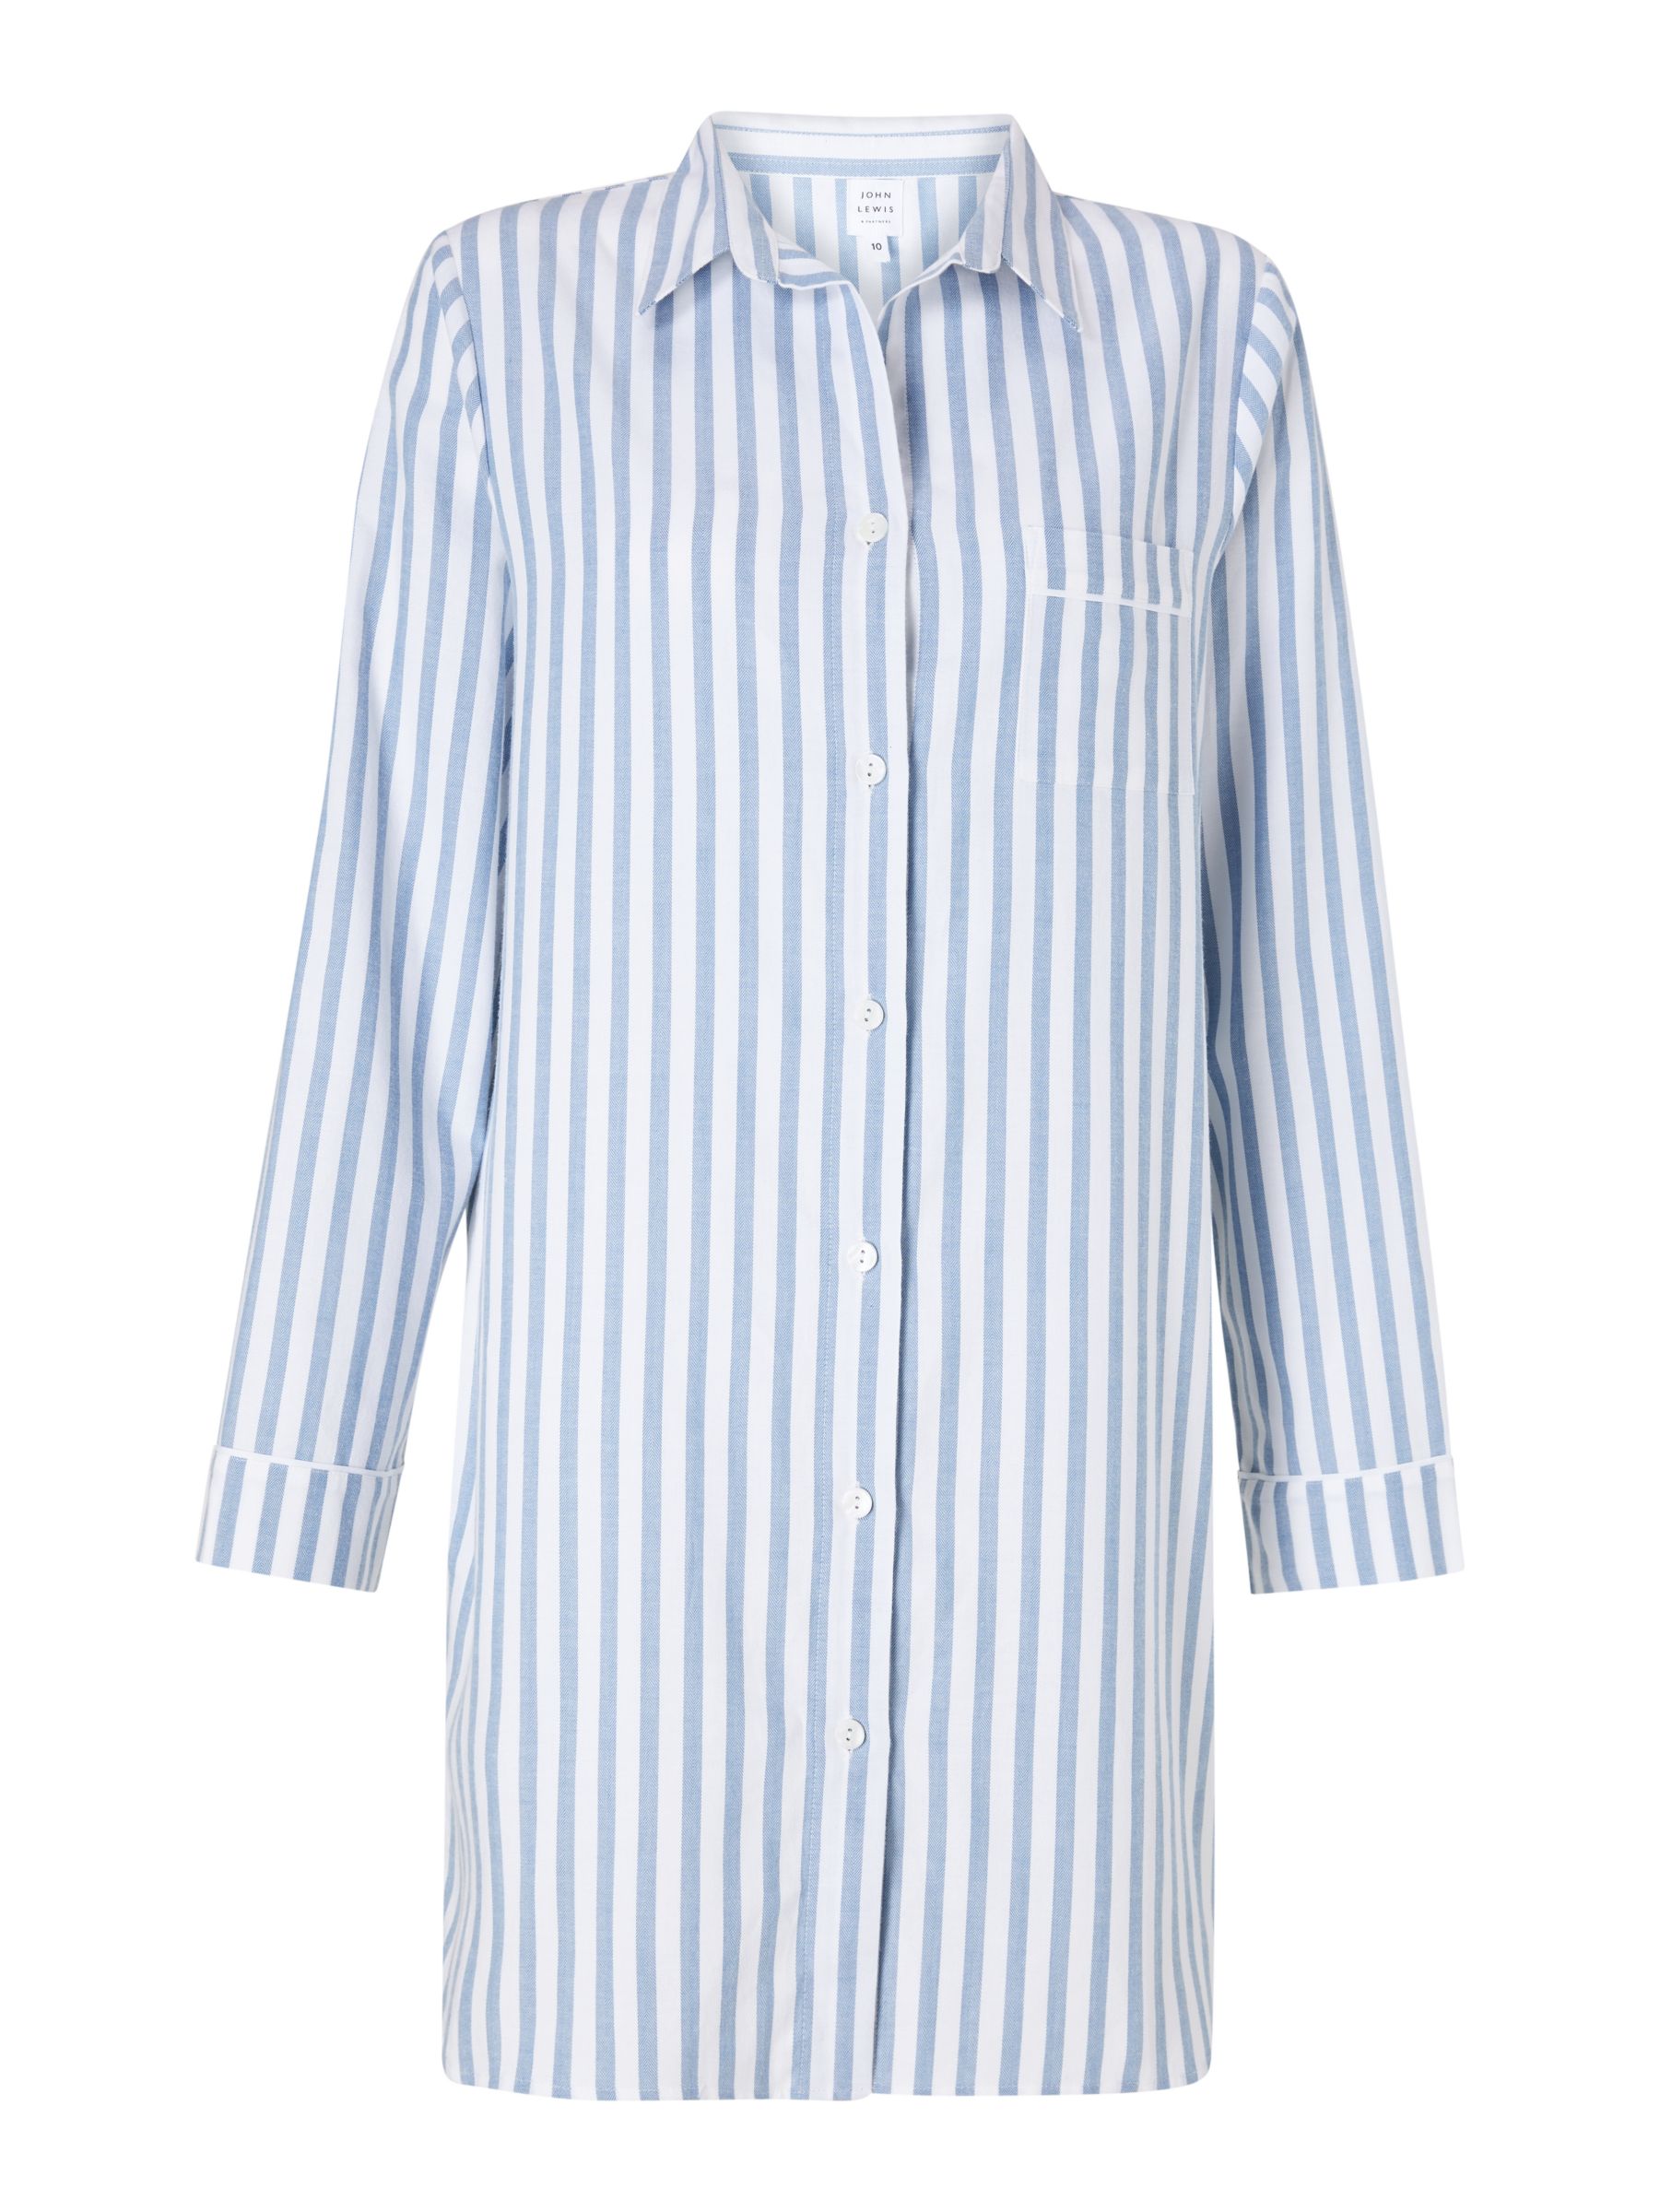 John Lewis & Partners Luna Stripe Cotton Nightshirt, White/Blue